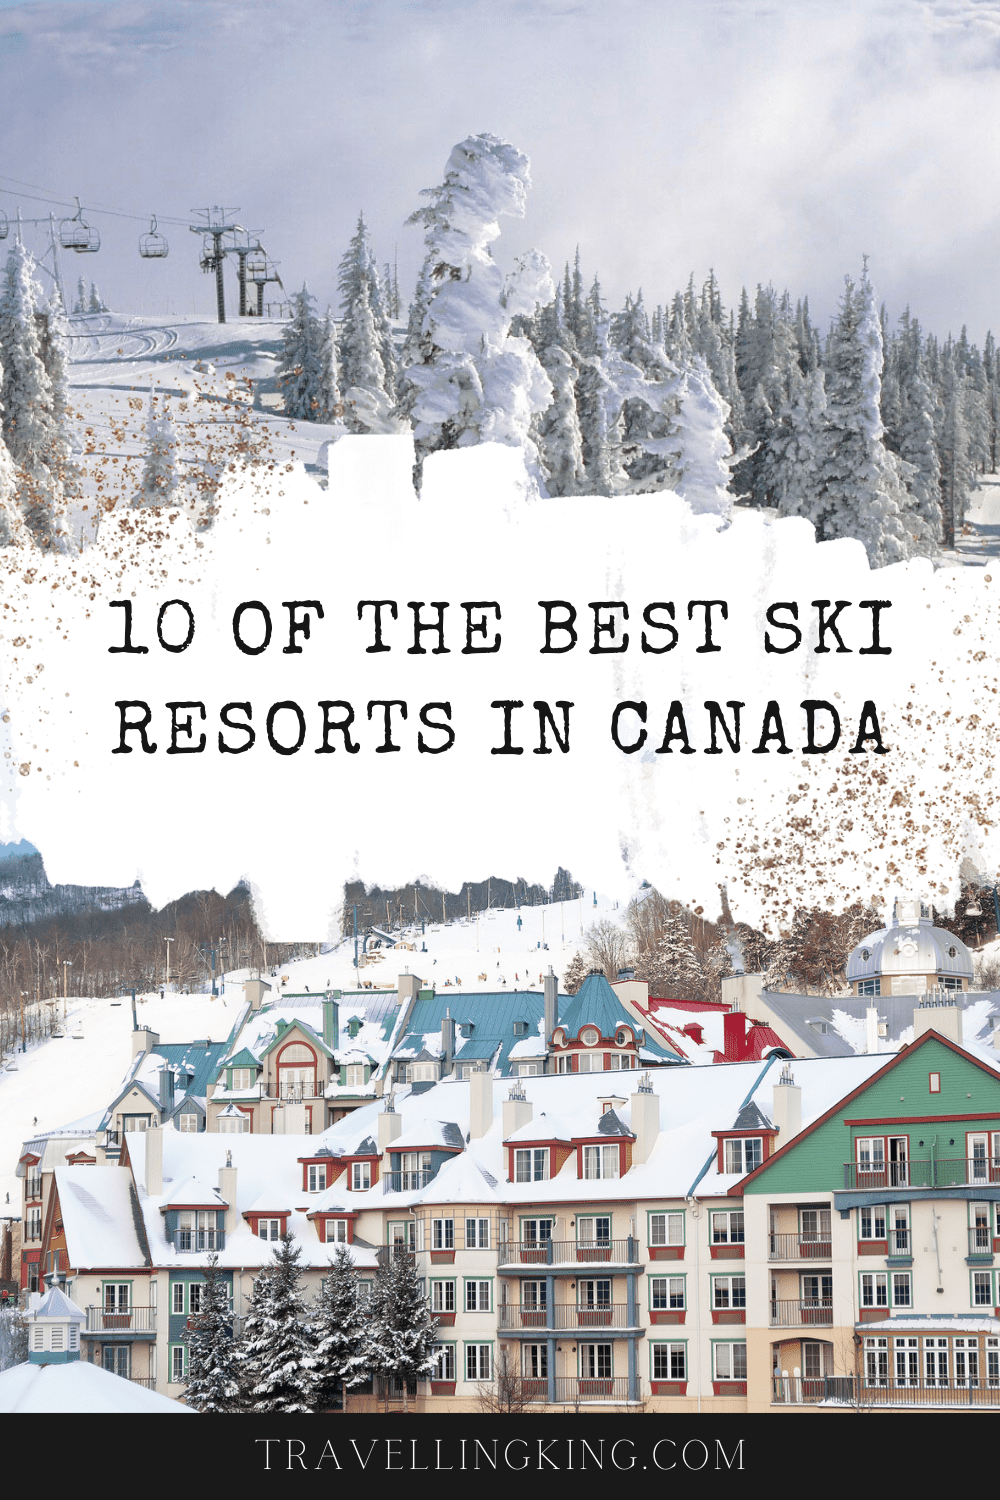 10 of the Best Ski Resorts in Canada